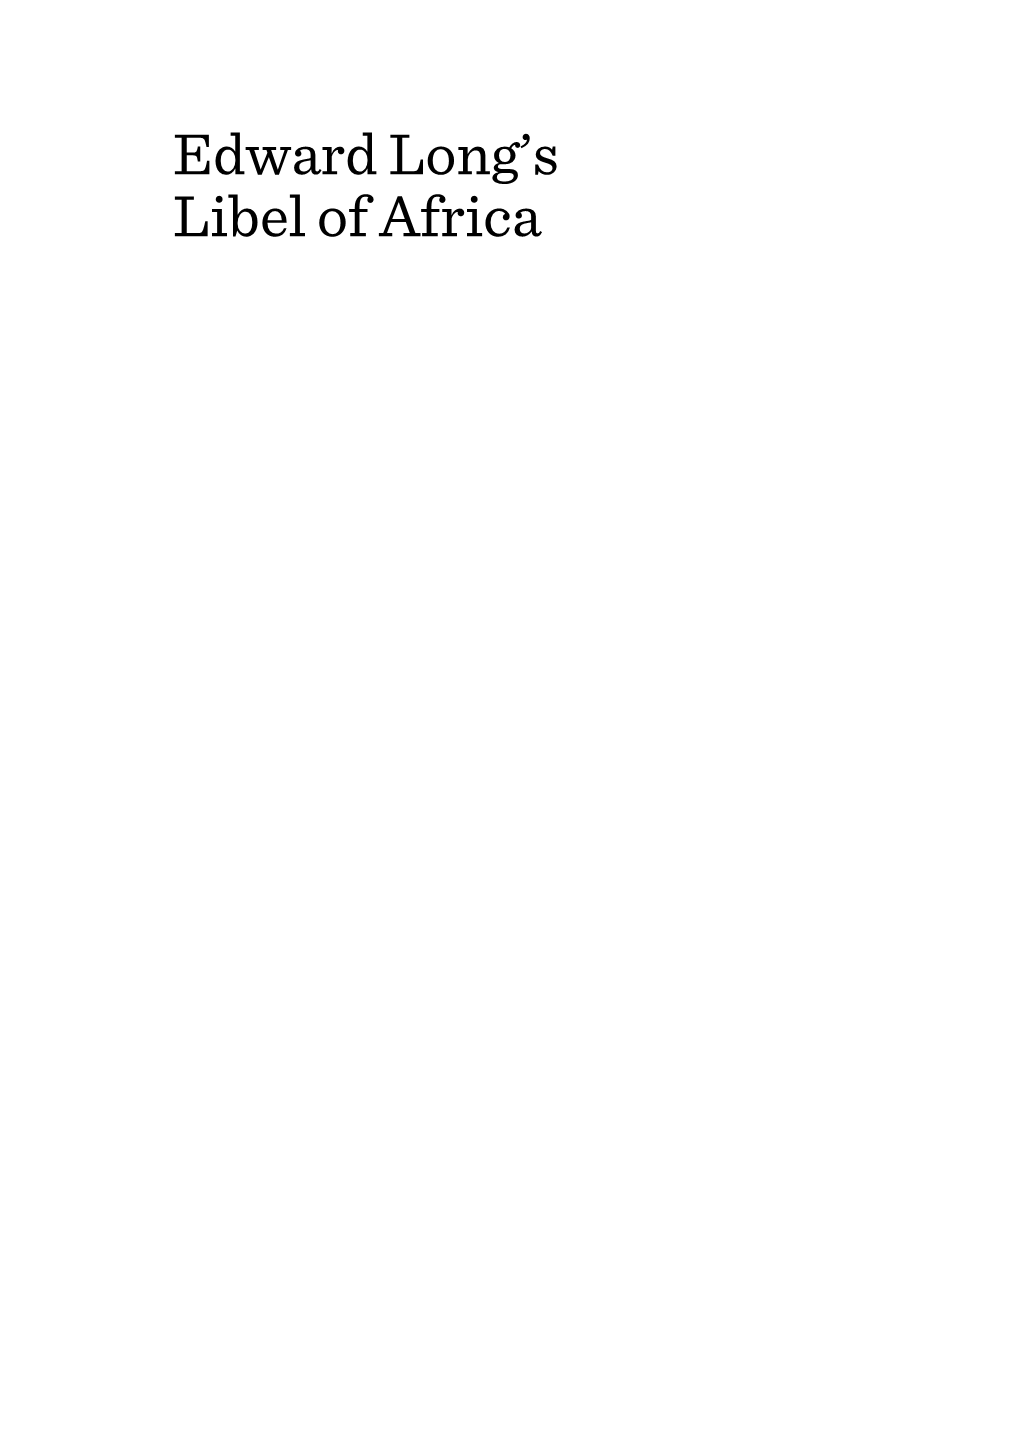 Edward Long's Libel of Africa